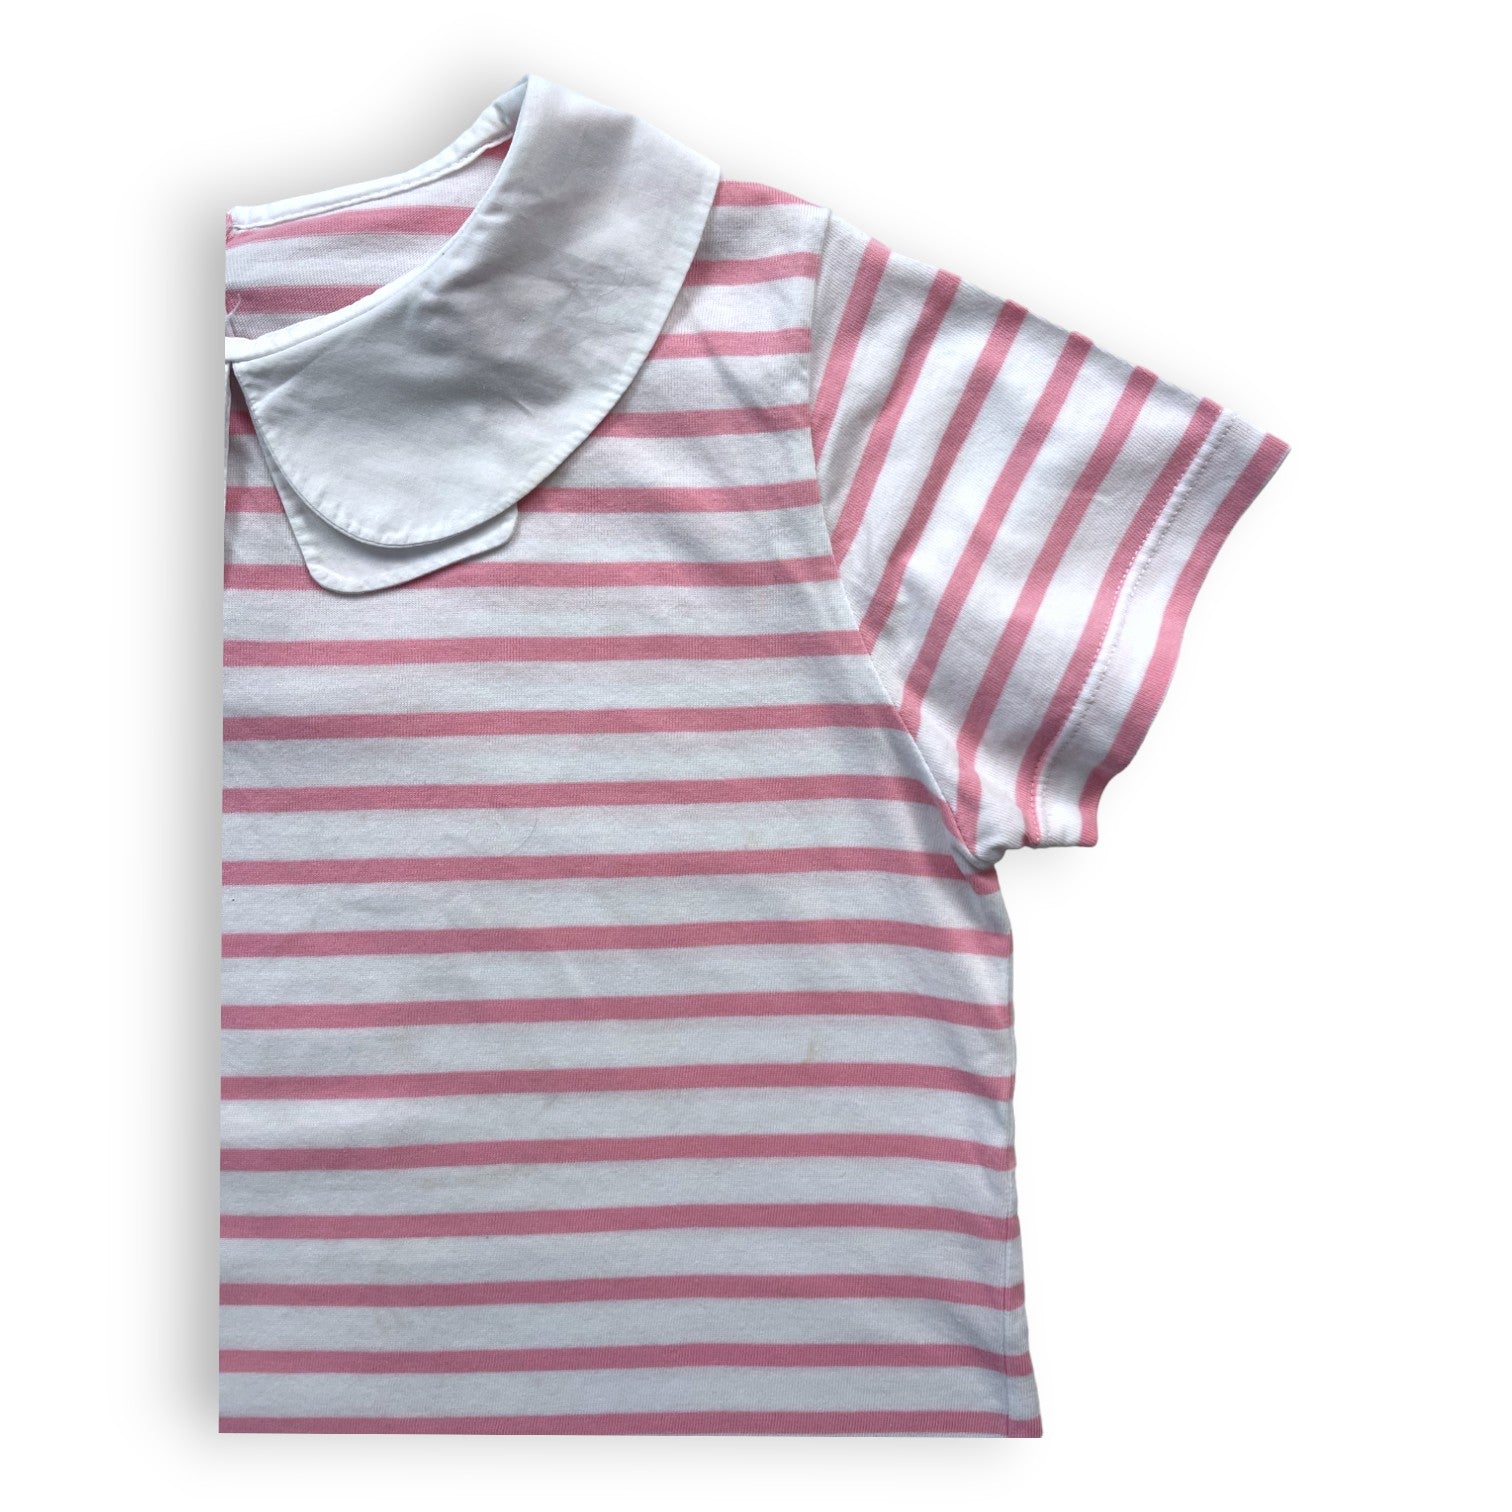 JACADI - T shirt rayé rose - 8 ans